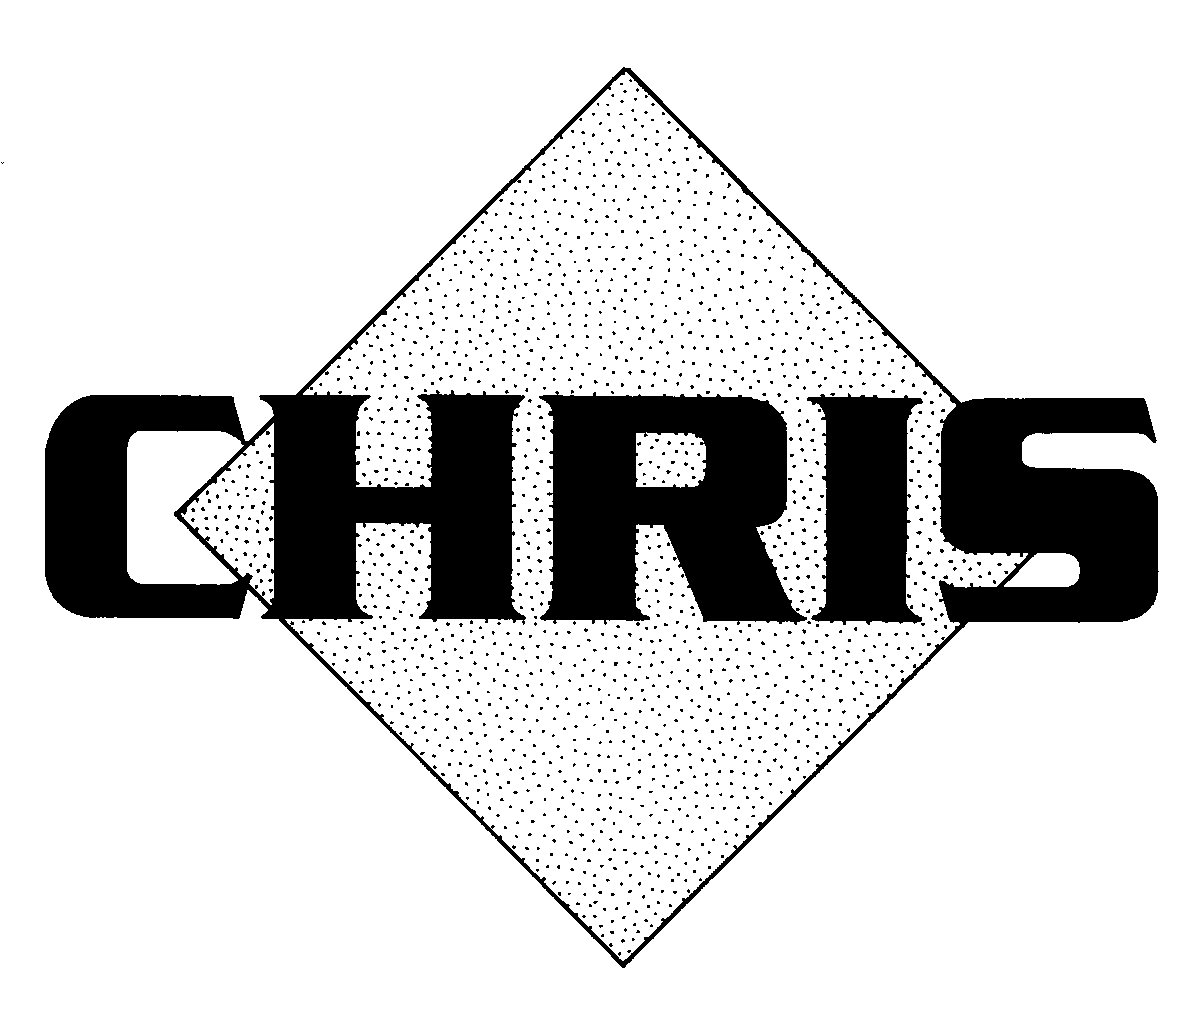 CHRIS